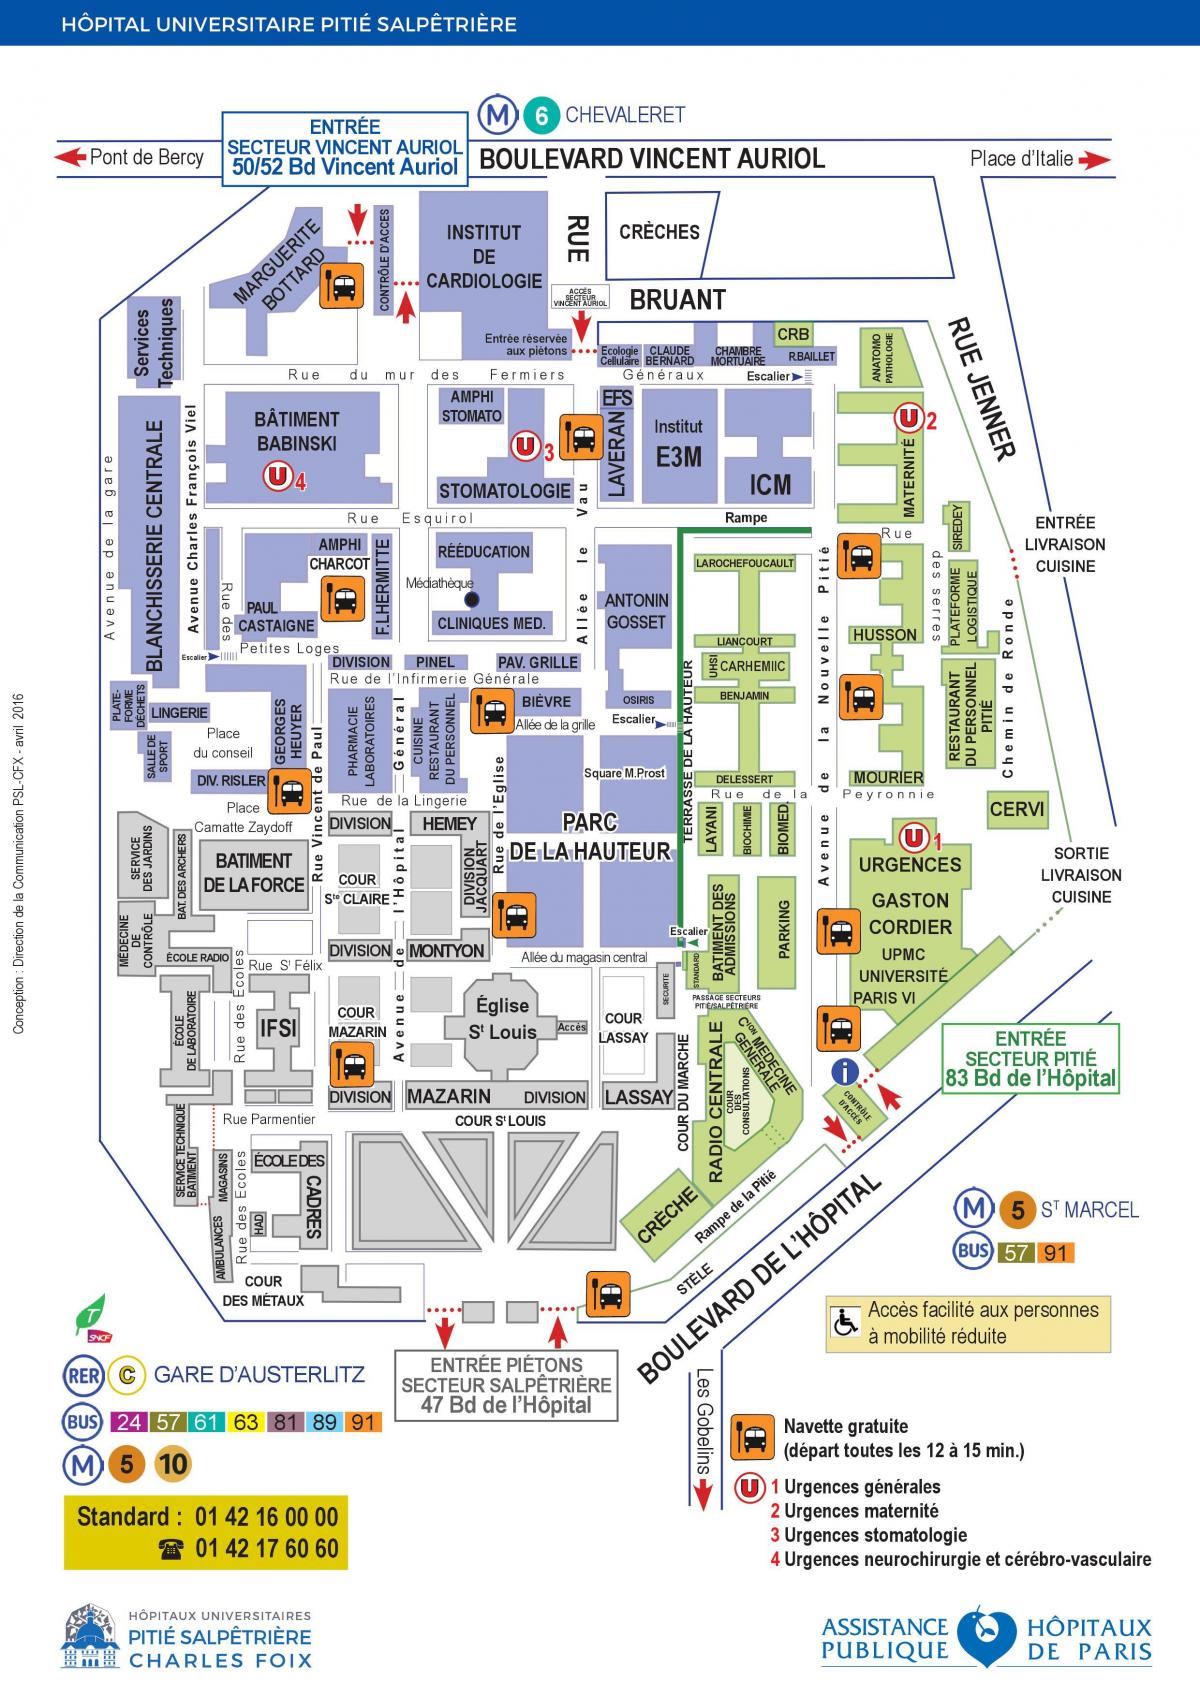 Mapa da Pitié Salpetriere hospital